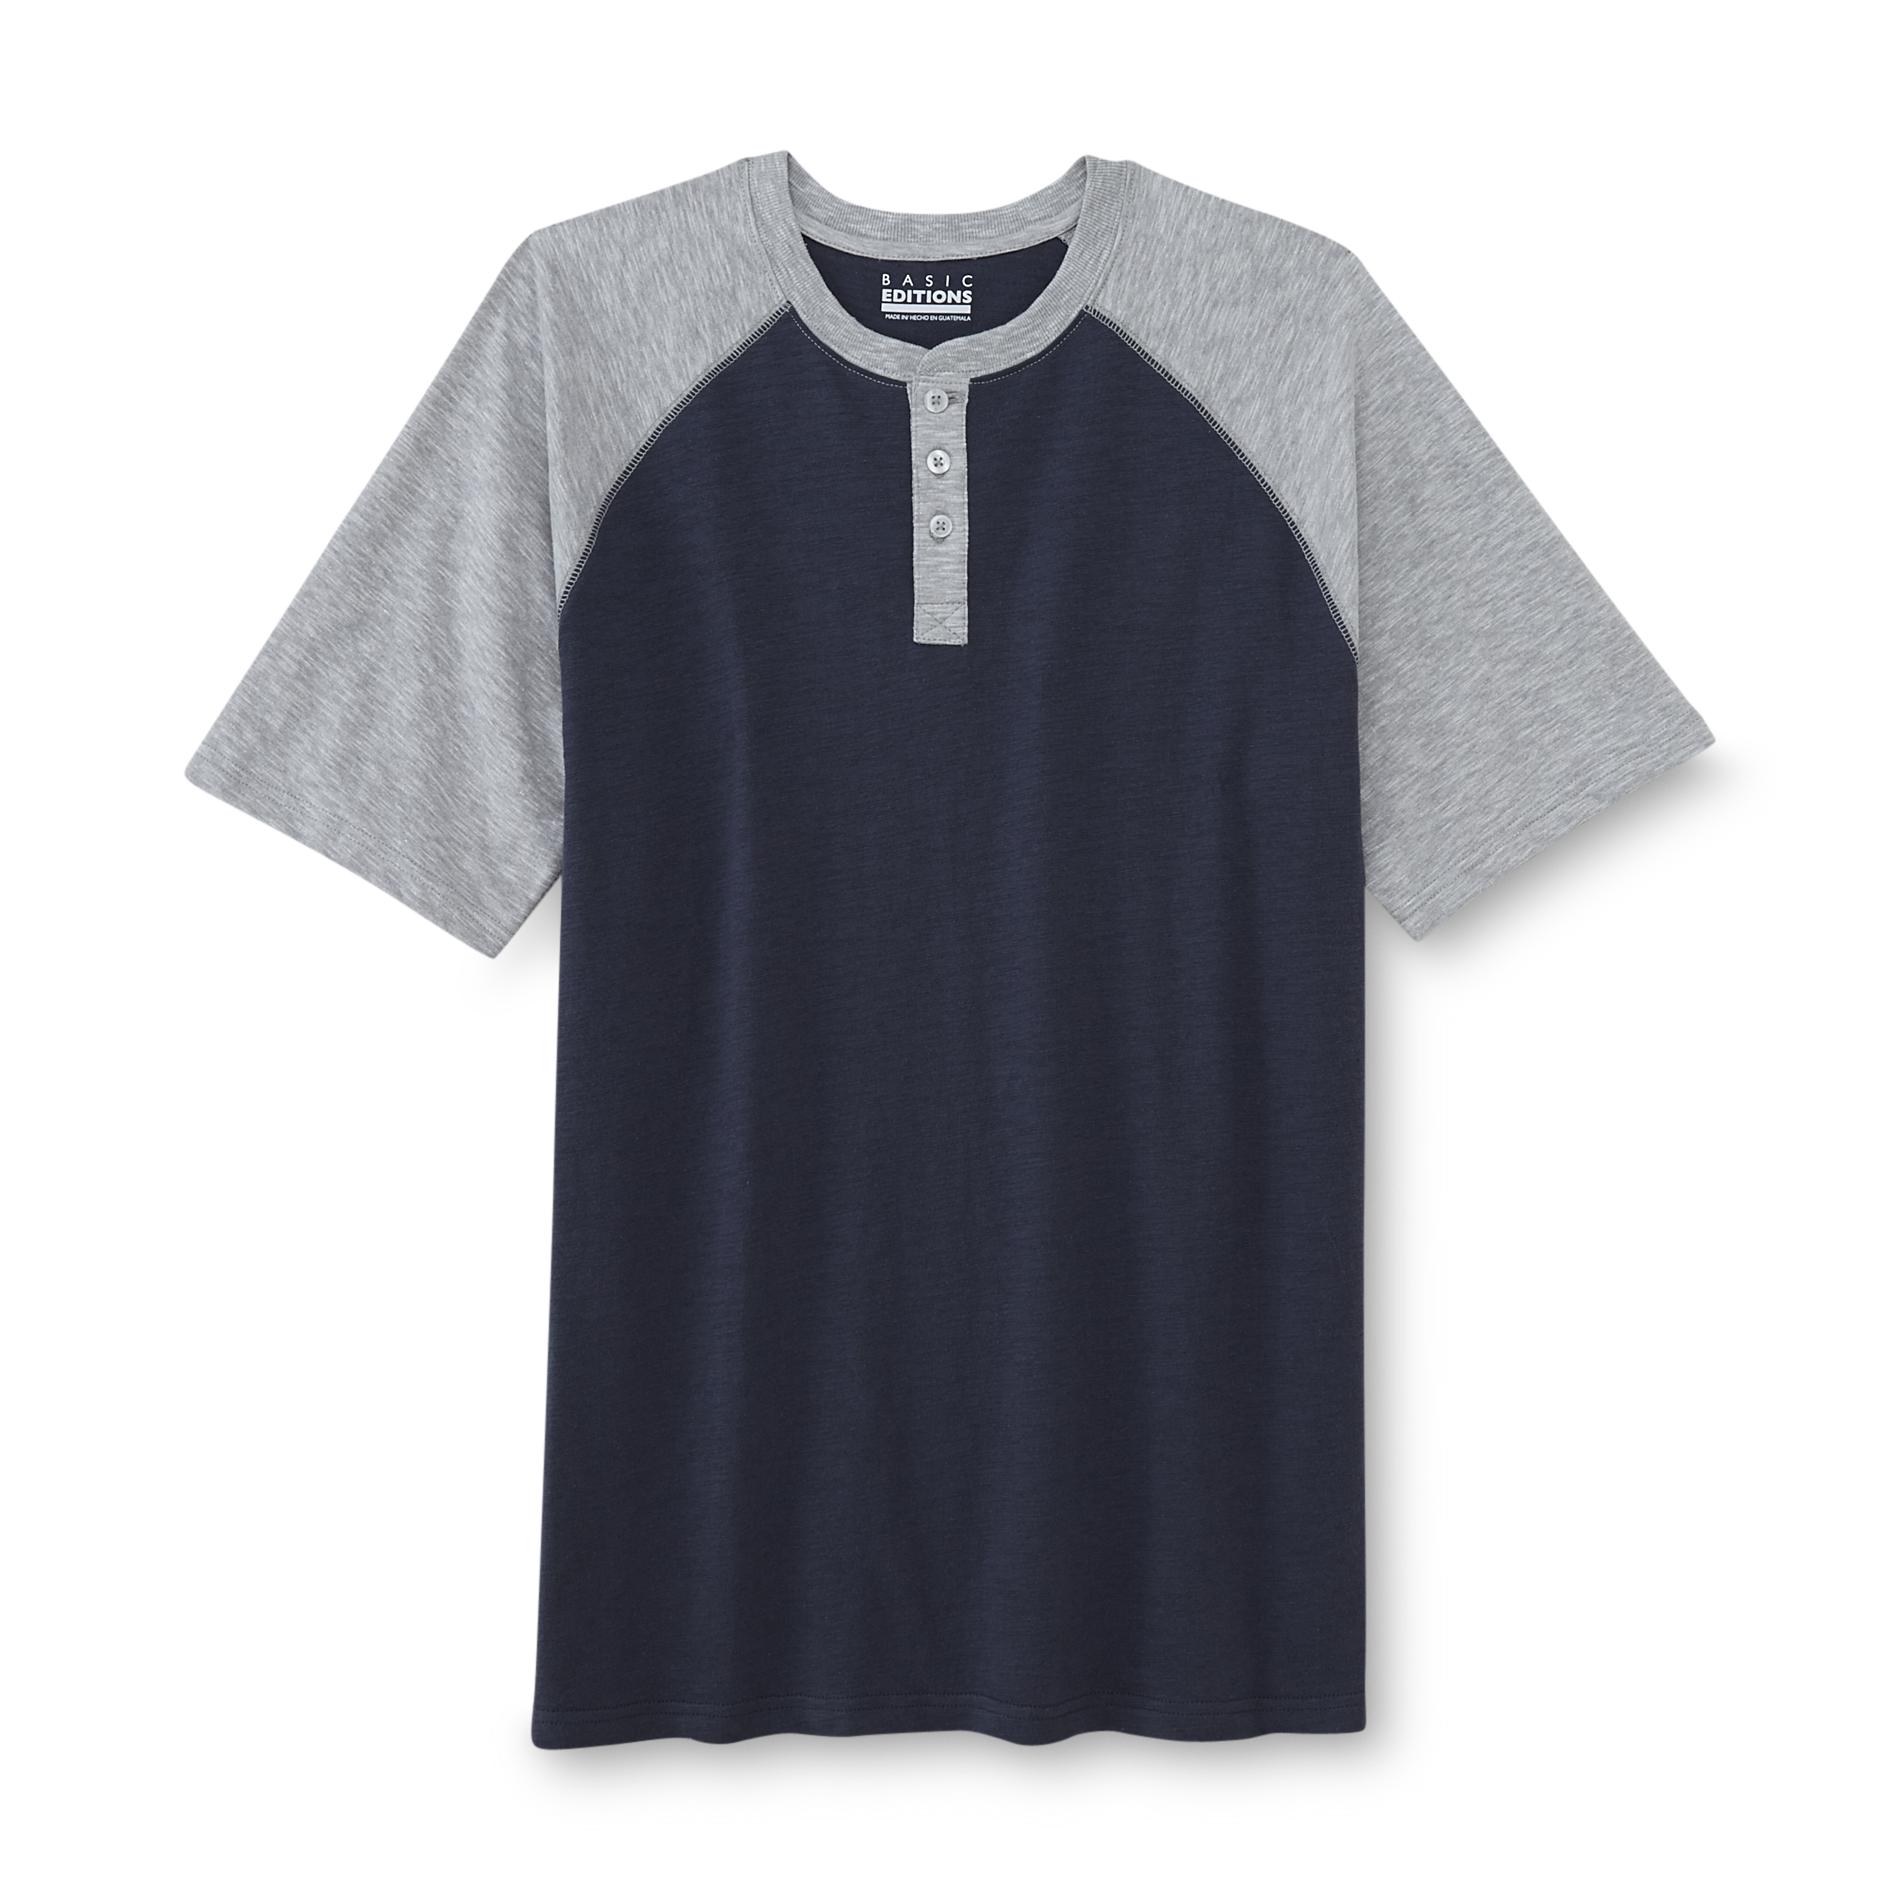 Basic Editions Men's Short-Sleeve Henley Shirt